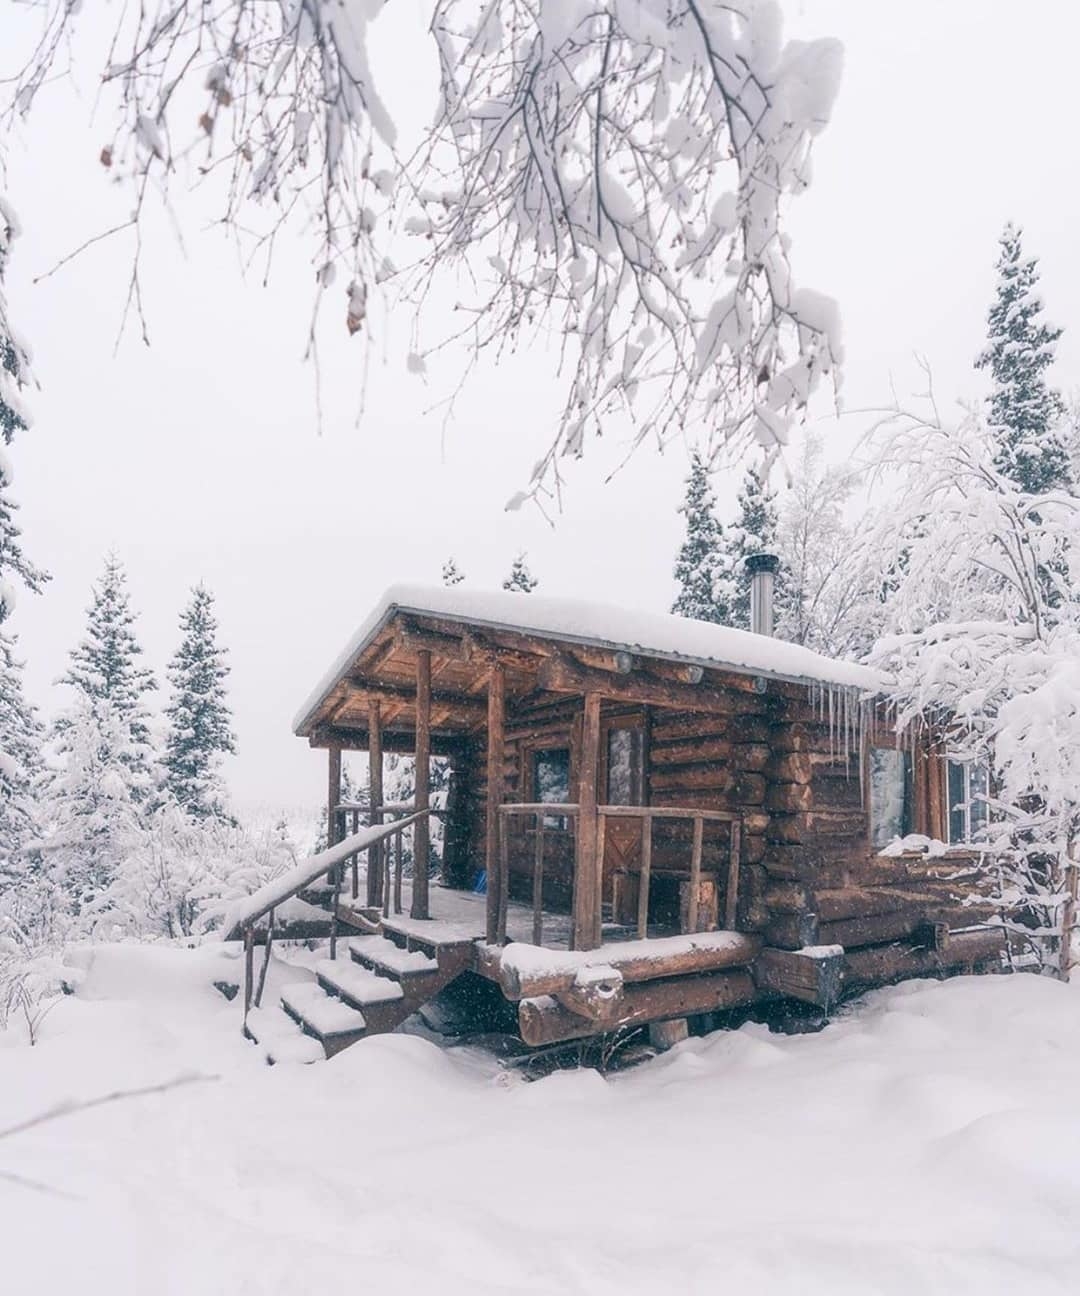 snowy cabin scene